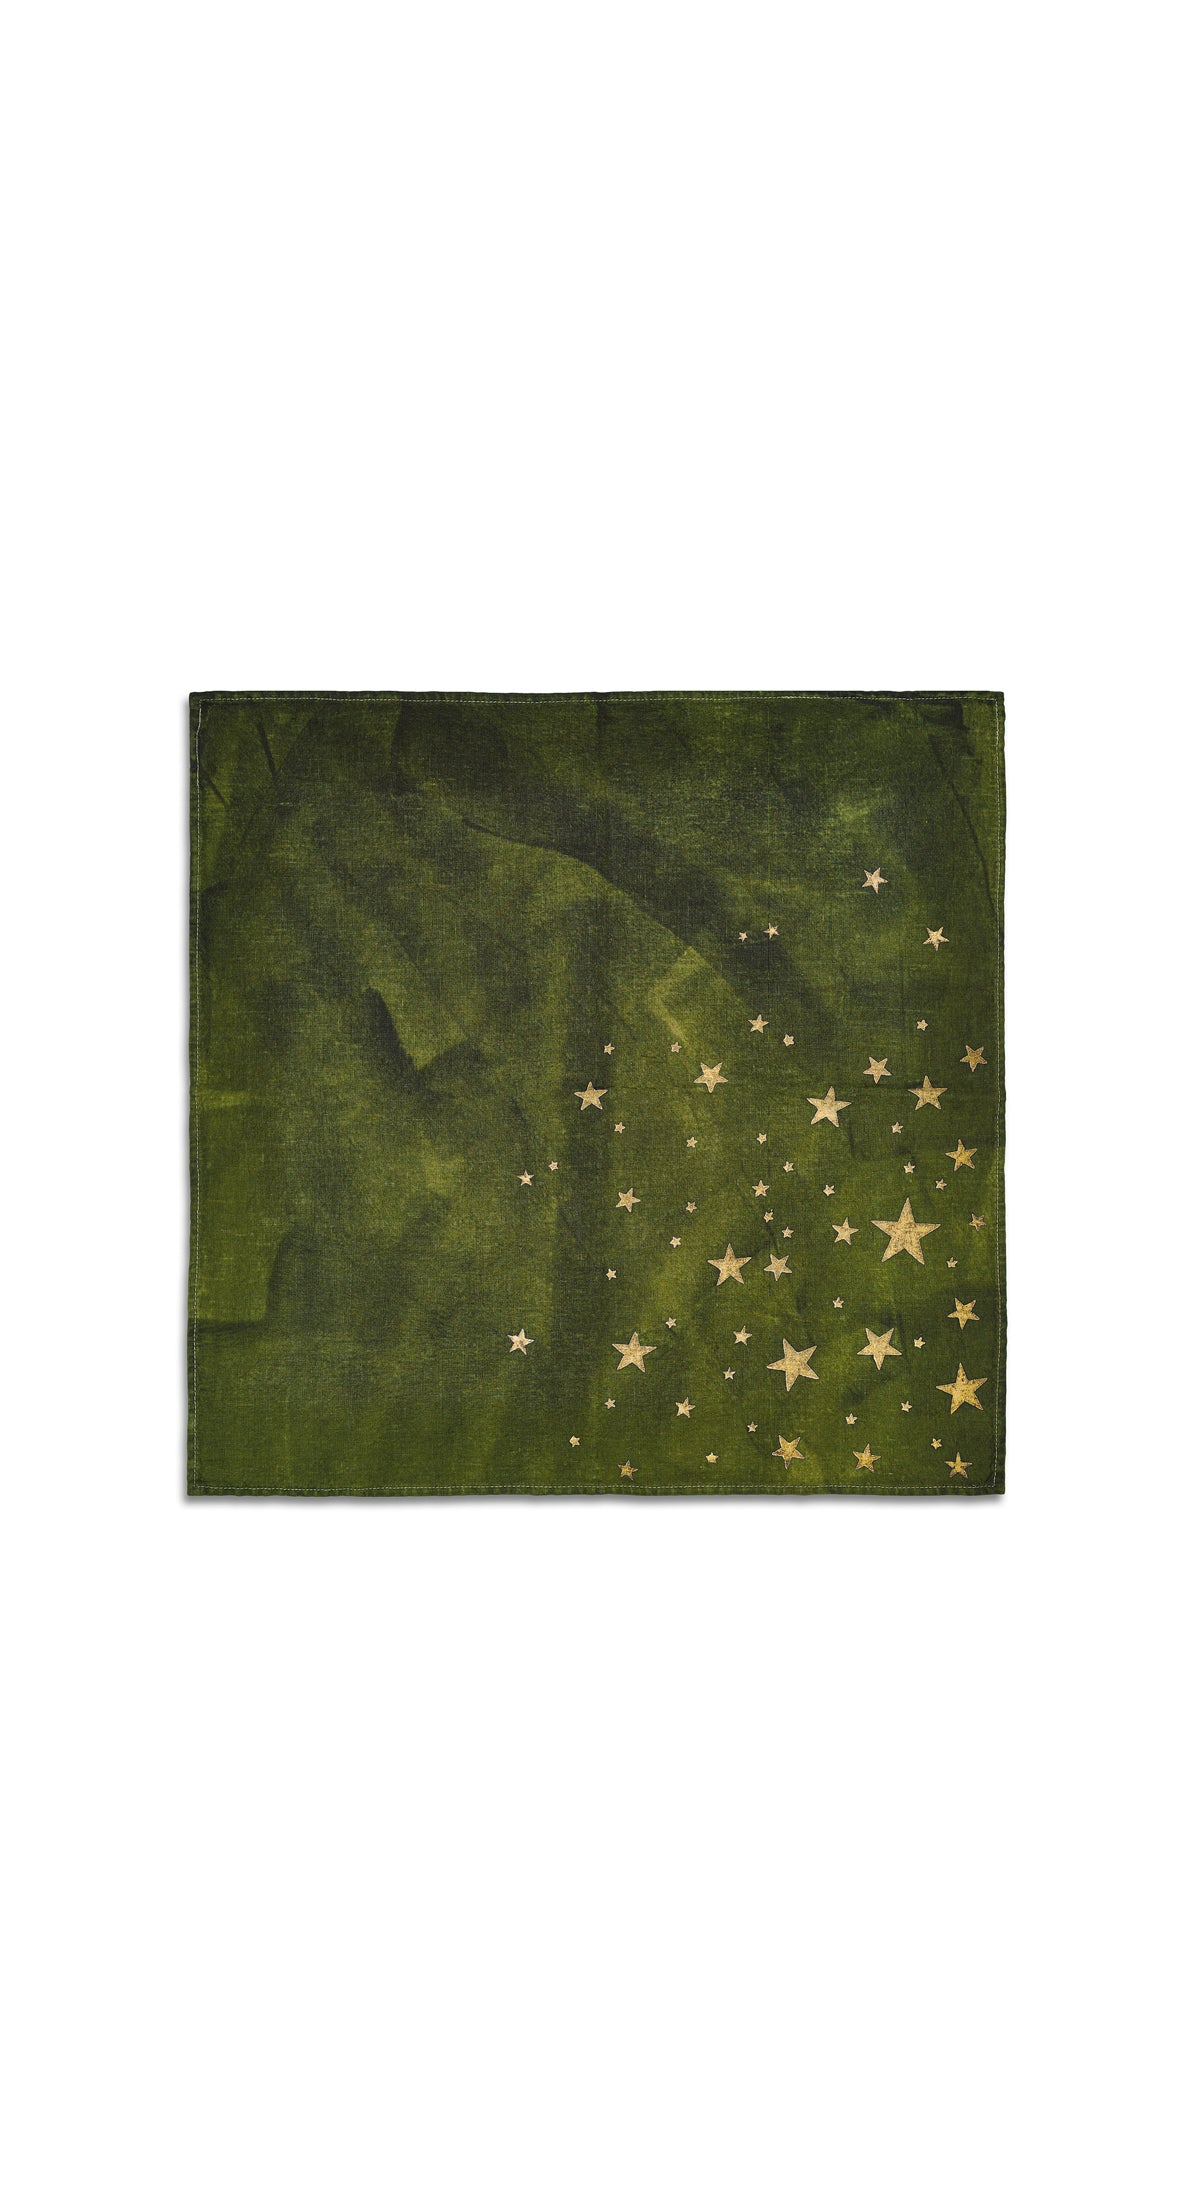 Falling Stars Linen Napkin in Avocado Green, 50x50cm